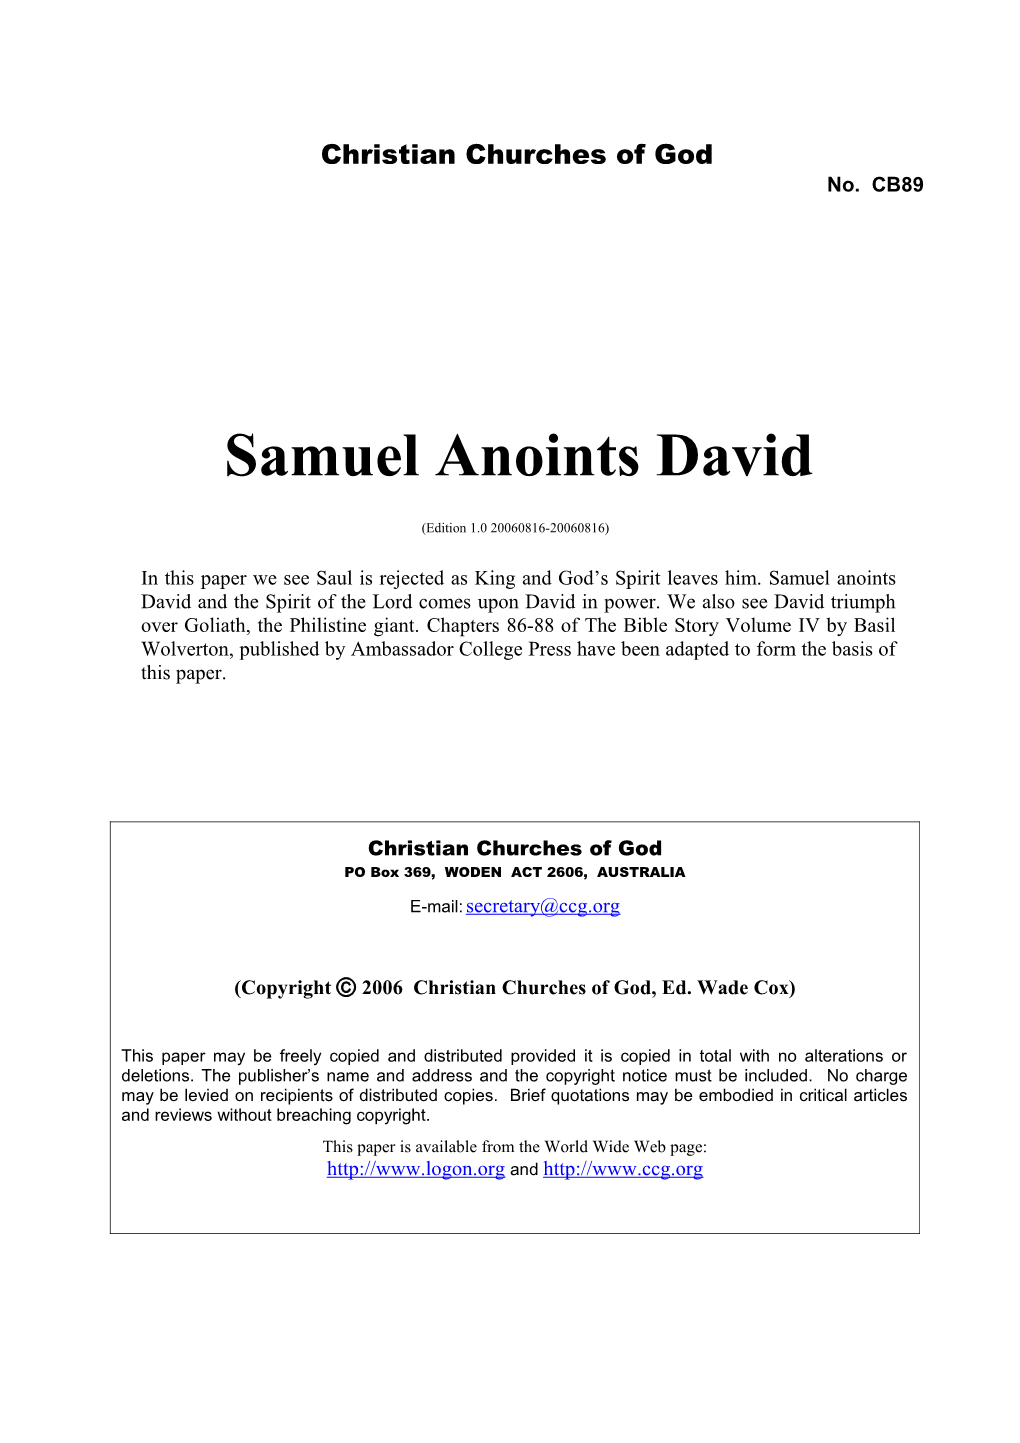 Samuel Anoints David (No. CB89)